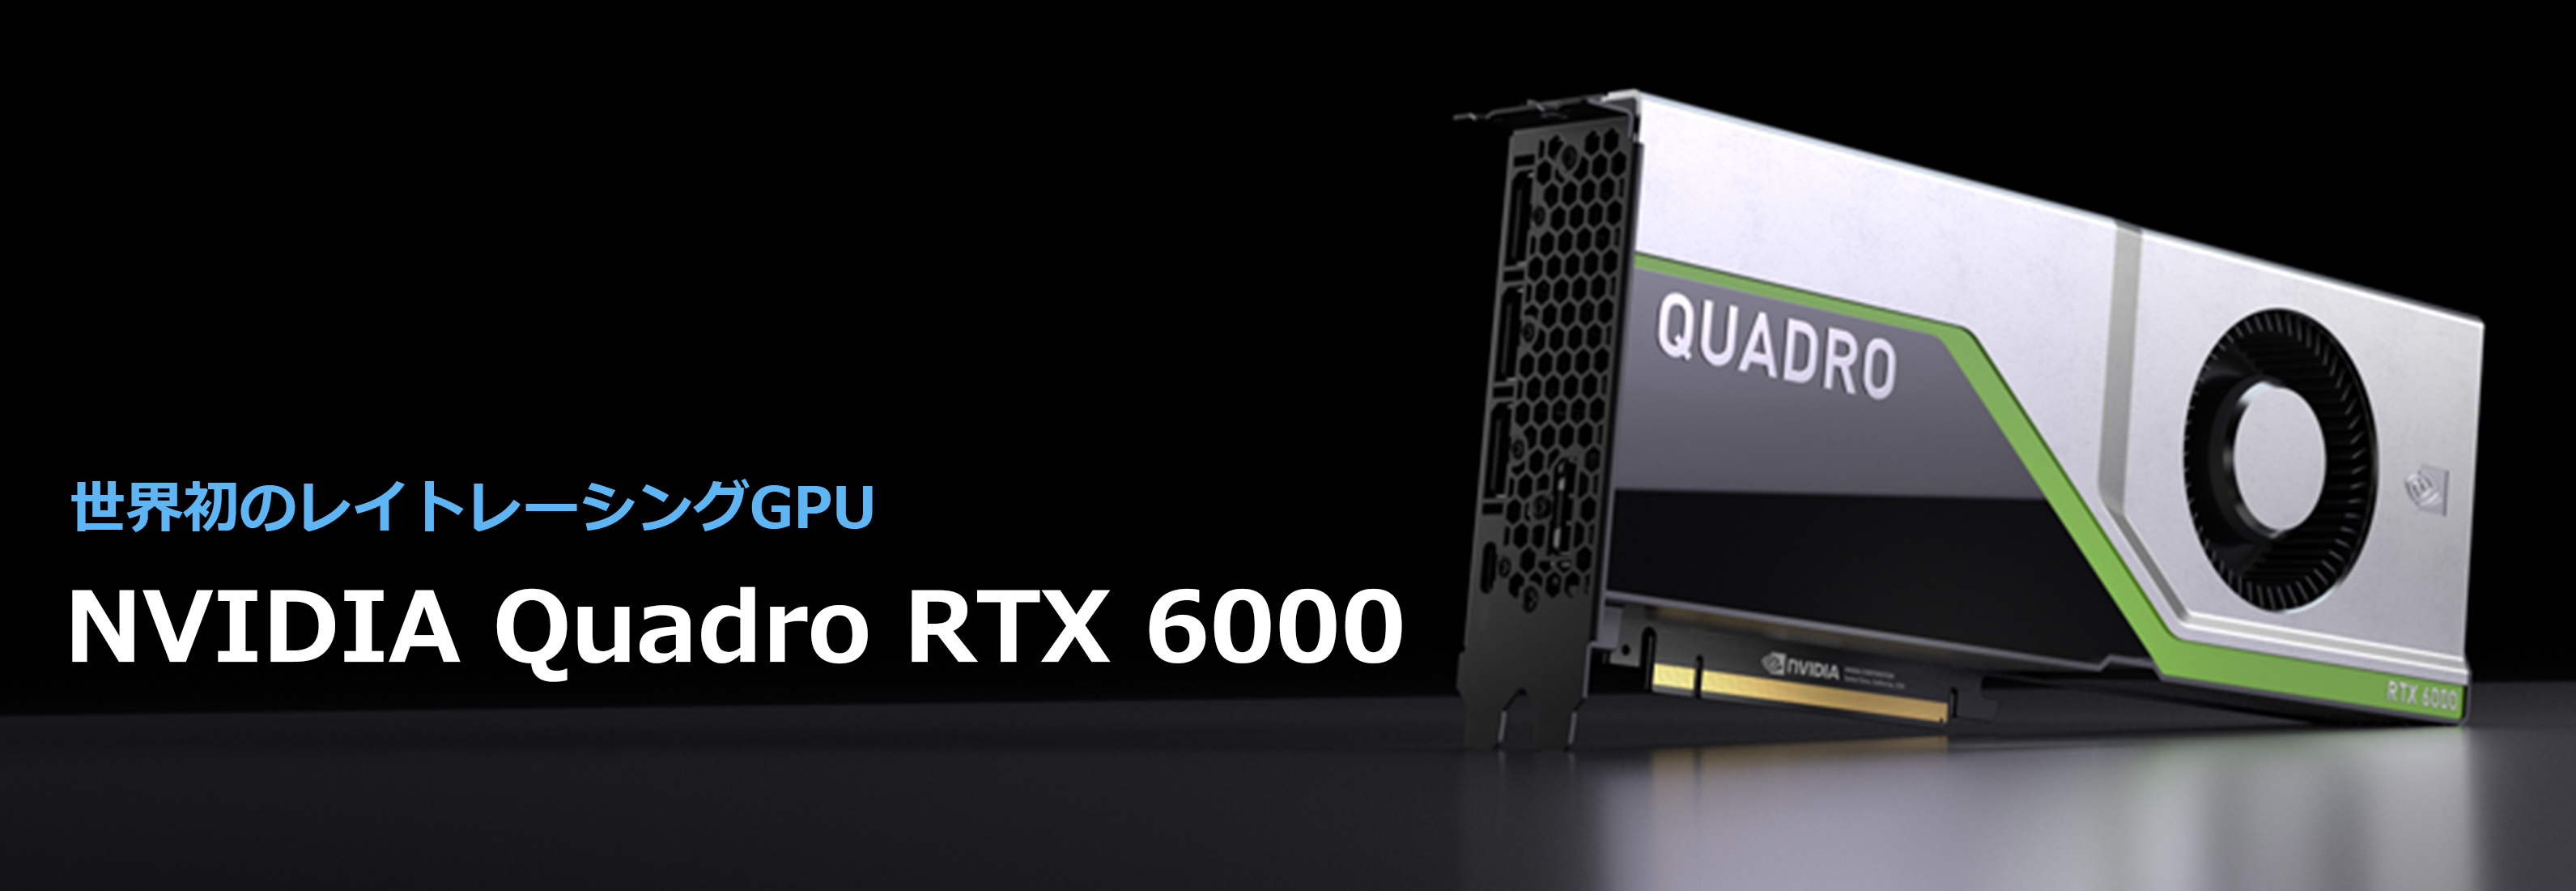 Synslinie hold Indeholde NVIDIA Quadro RTX 6000 | 菱洋エレクトロ株式会社 - NVIDIA製品情報